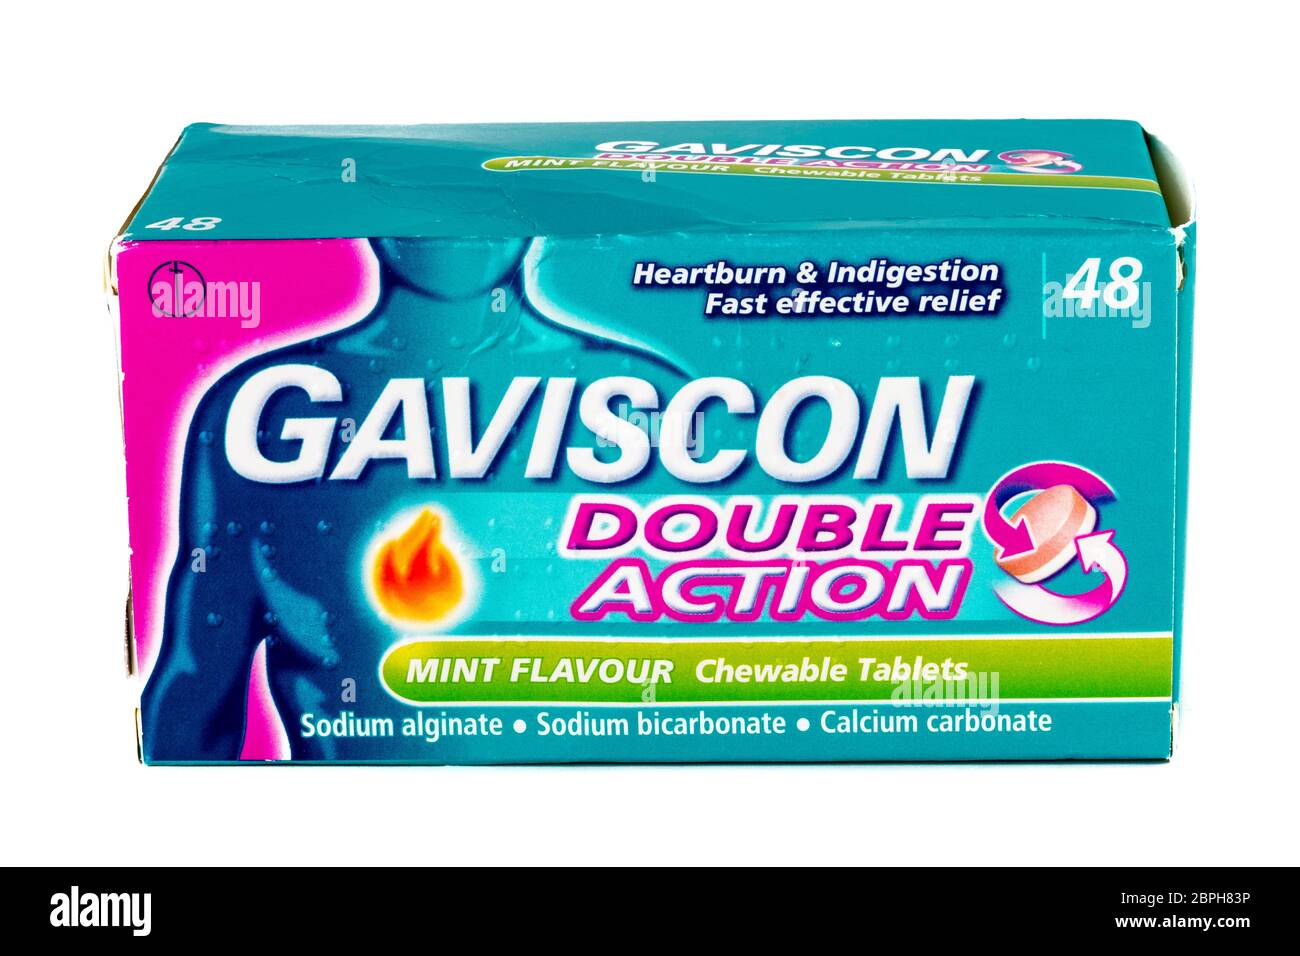 Gaviscon double action tablets, Gaviscon tablets, Gaviscon heartburn tablets, Gaviscon indigestion tablets, sodium bicarbonate, sodium alginate, Stock Photo